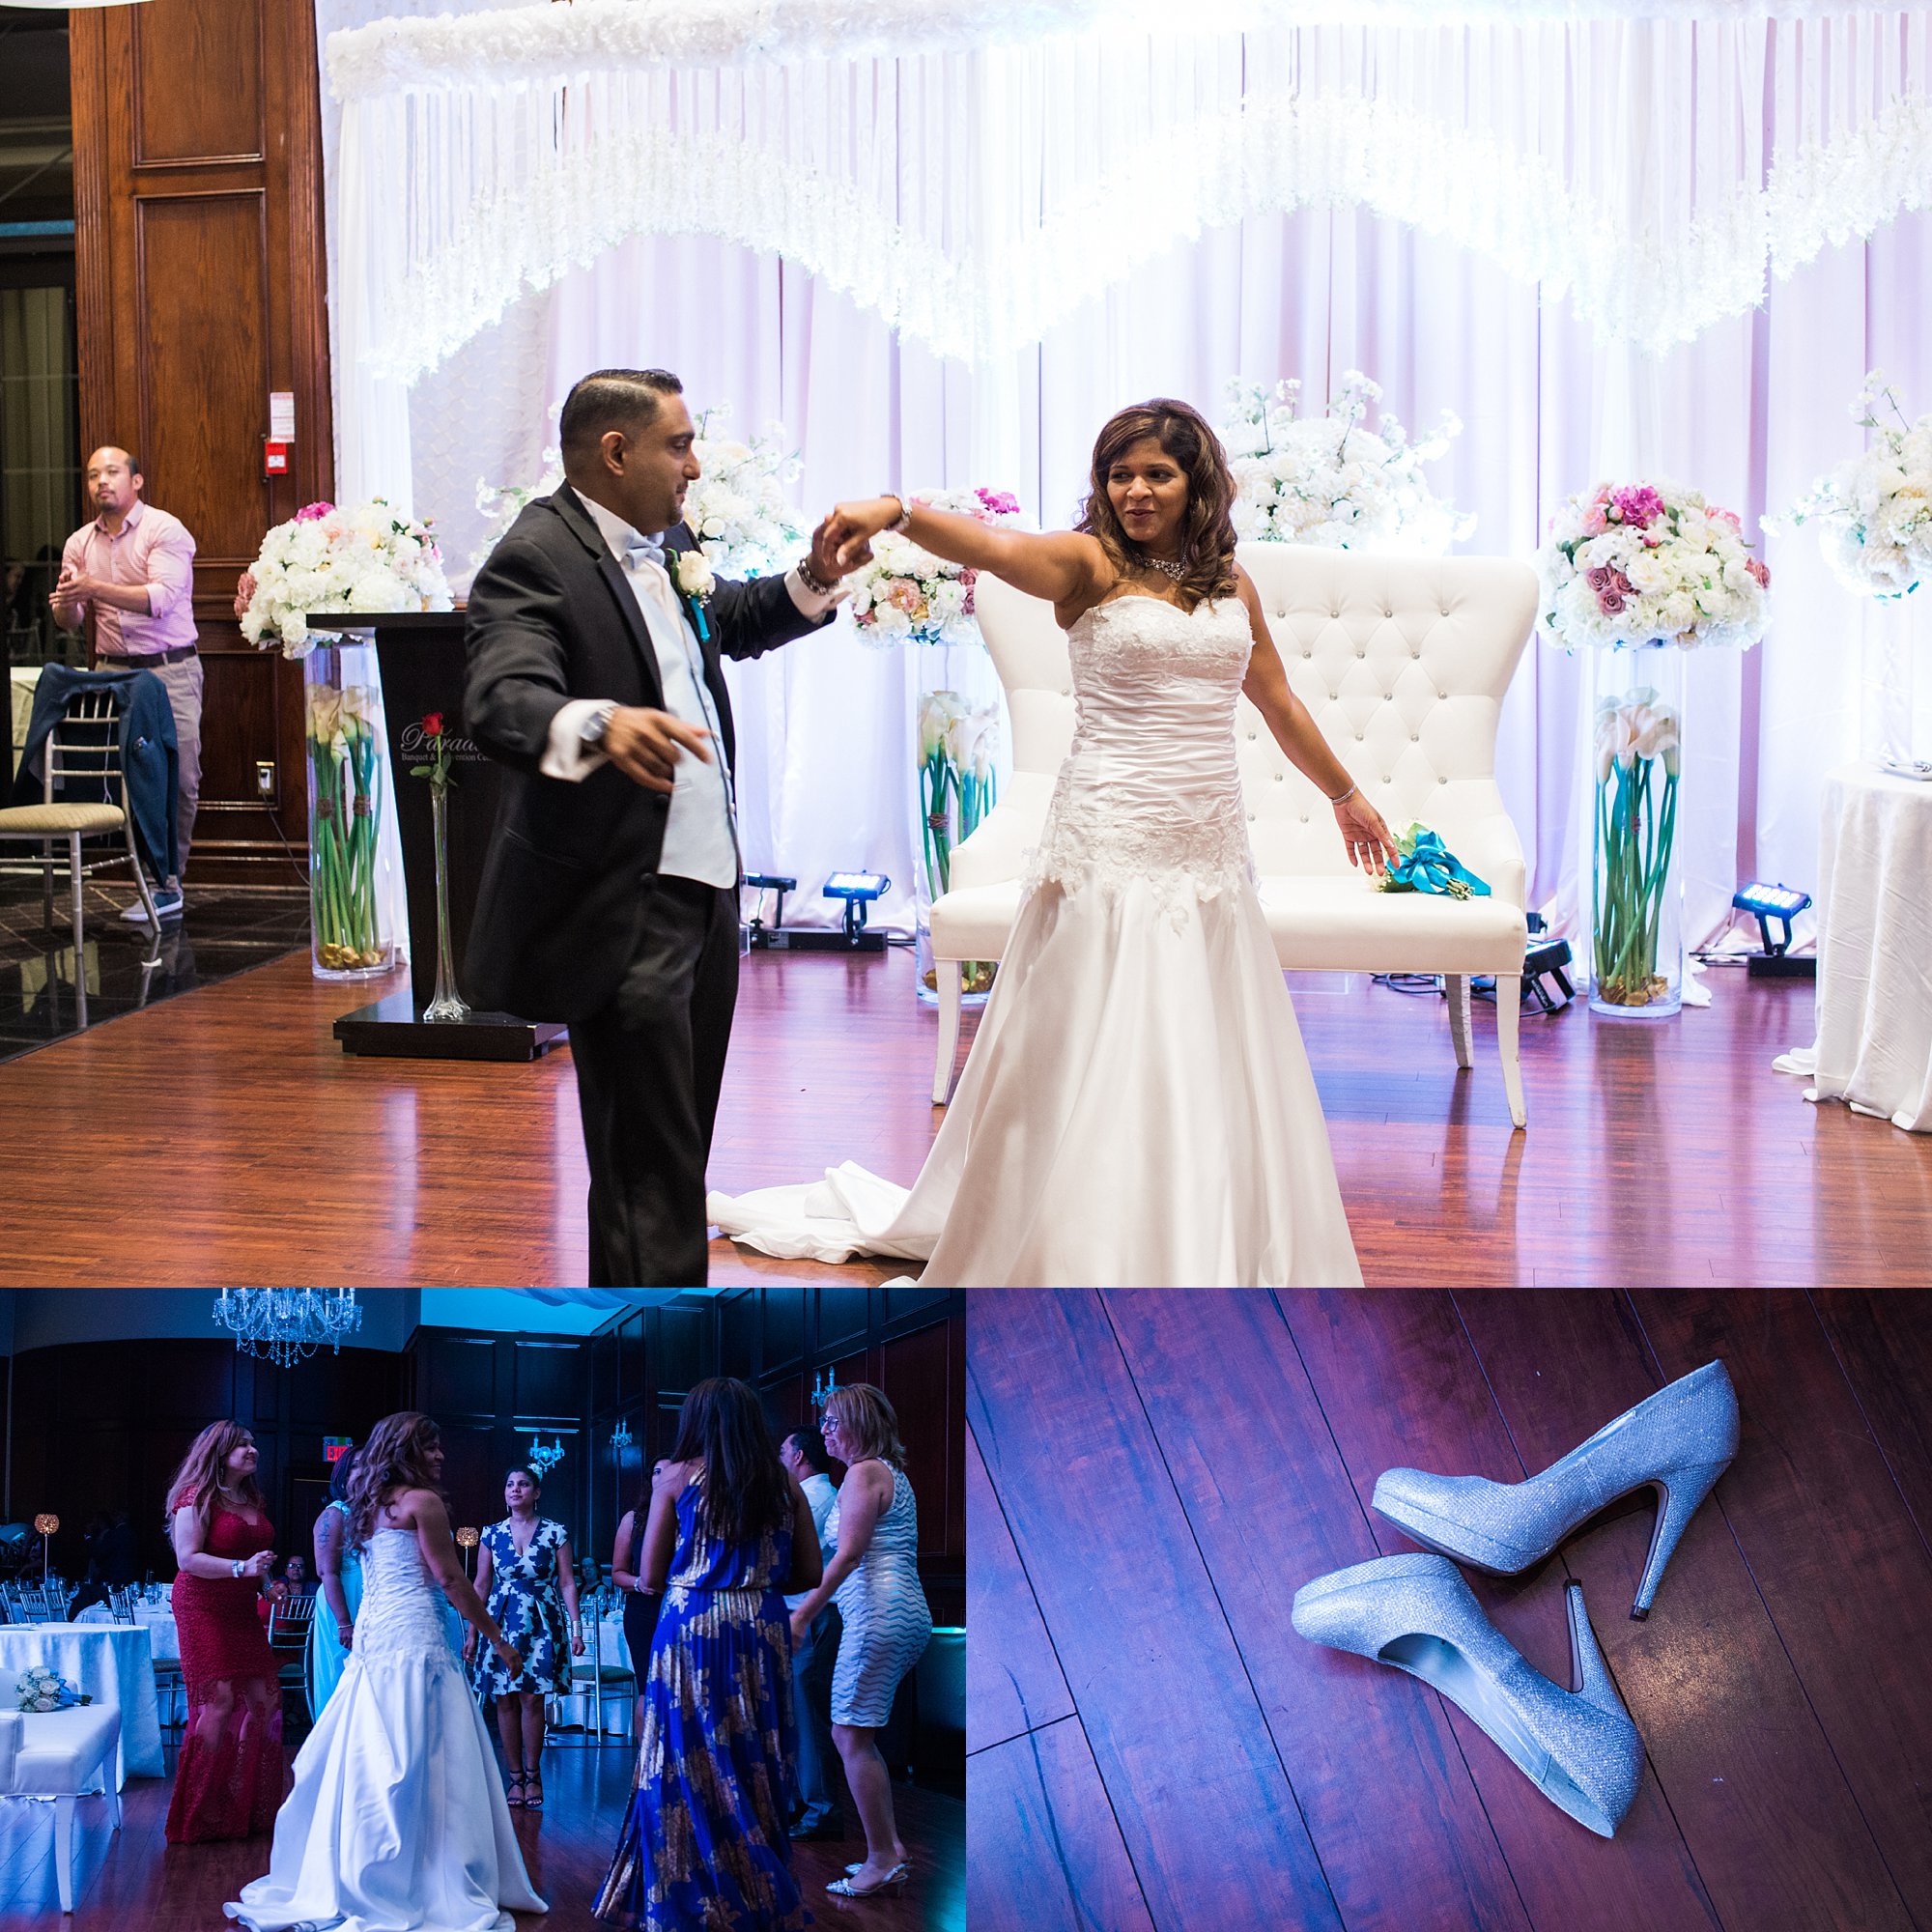 Jennifer Blaak Photography, Toronto wedding photographer, Hamilton wedding photographer, First dance, bride and groom, dance floor